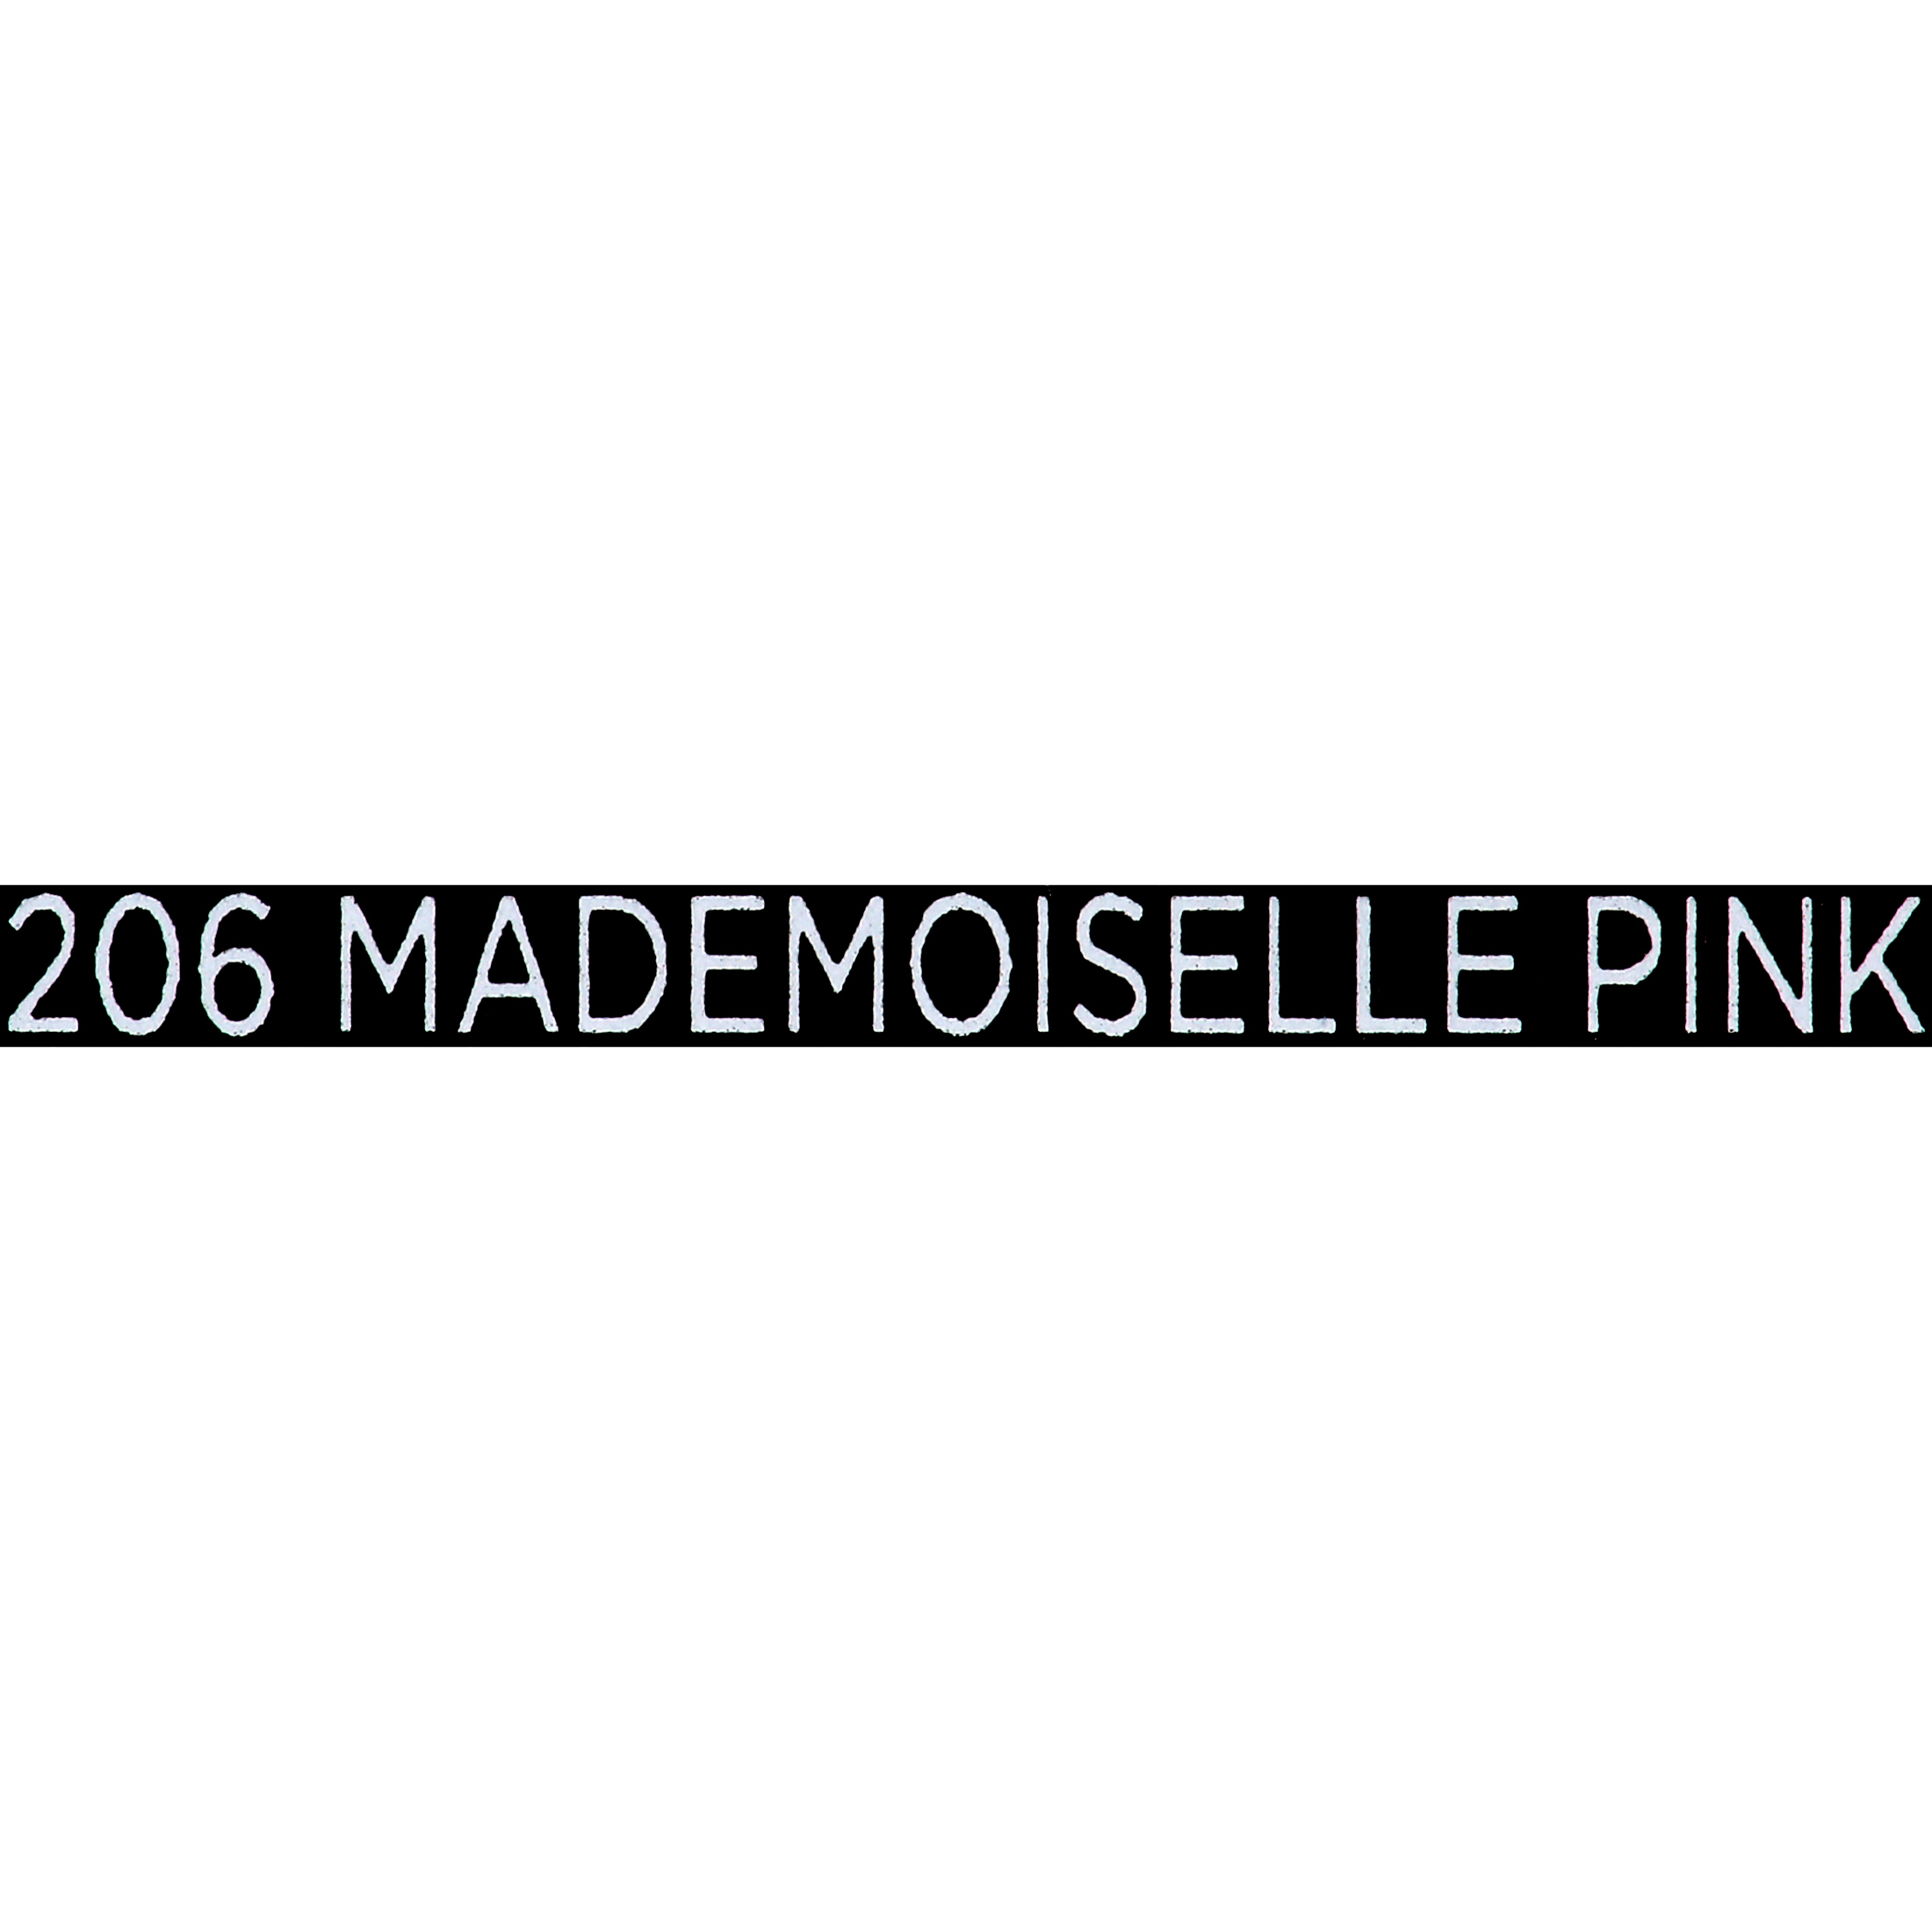 L'Oreal Paris Colour Riche Monos Eyeshadow, Mademoiselle Pink - image 4 of 4